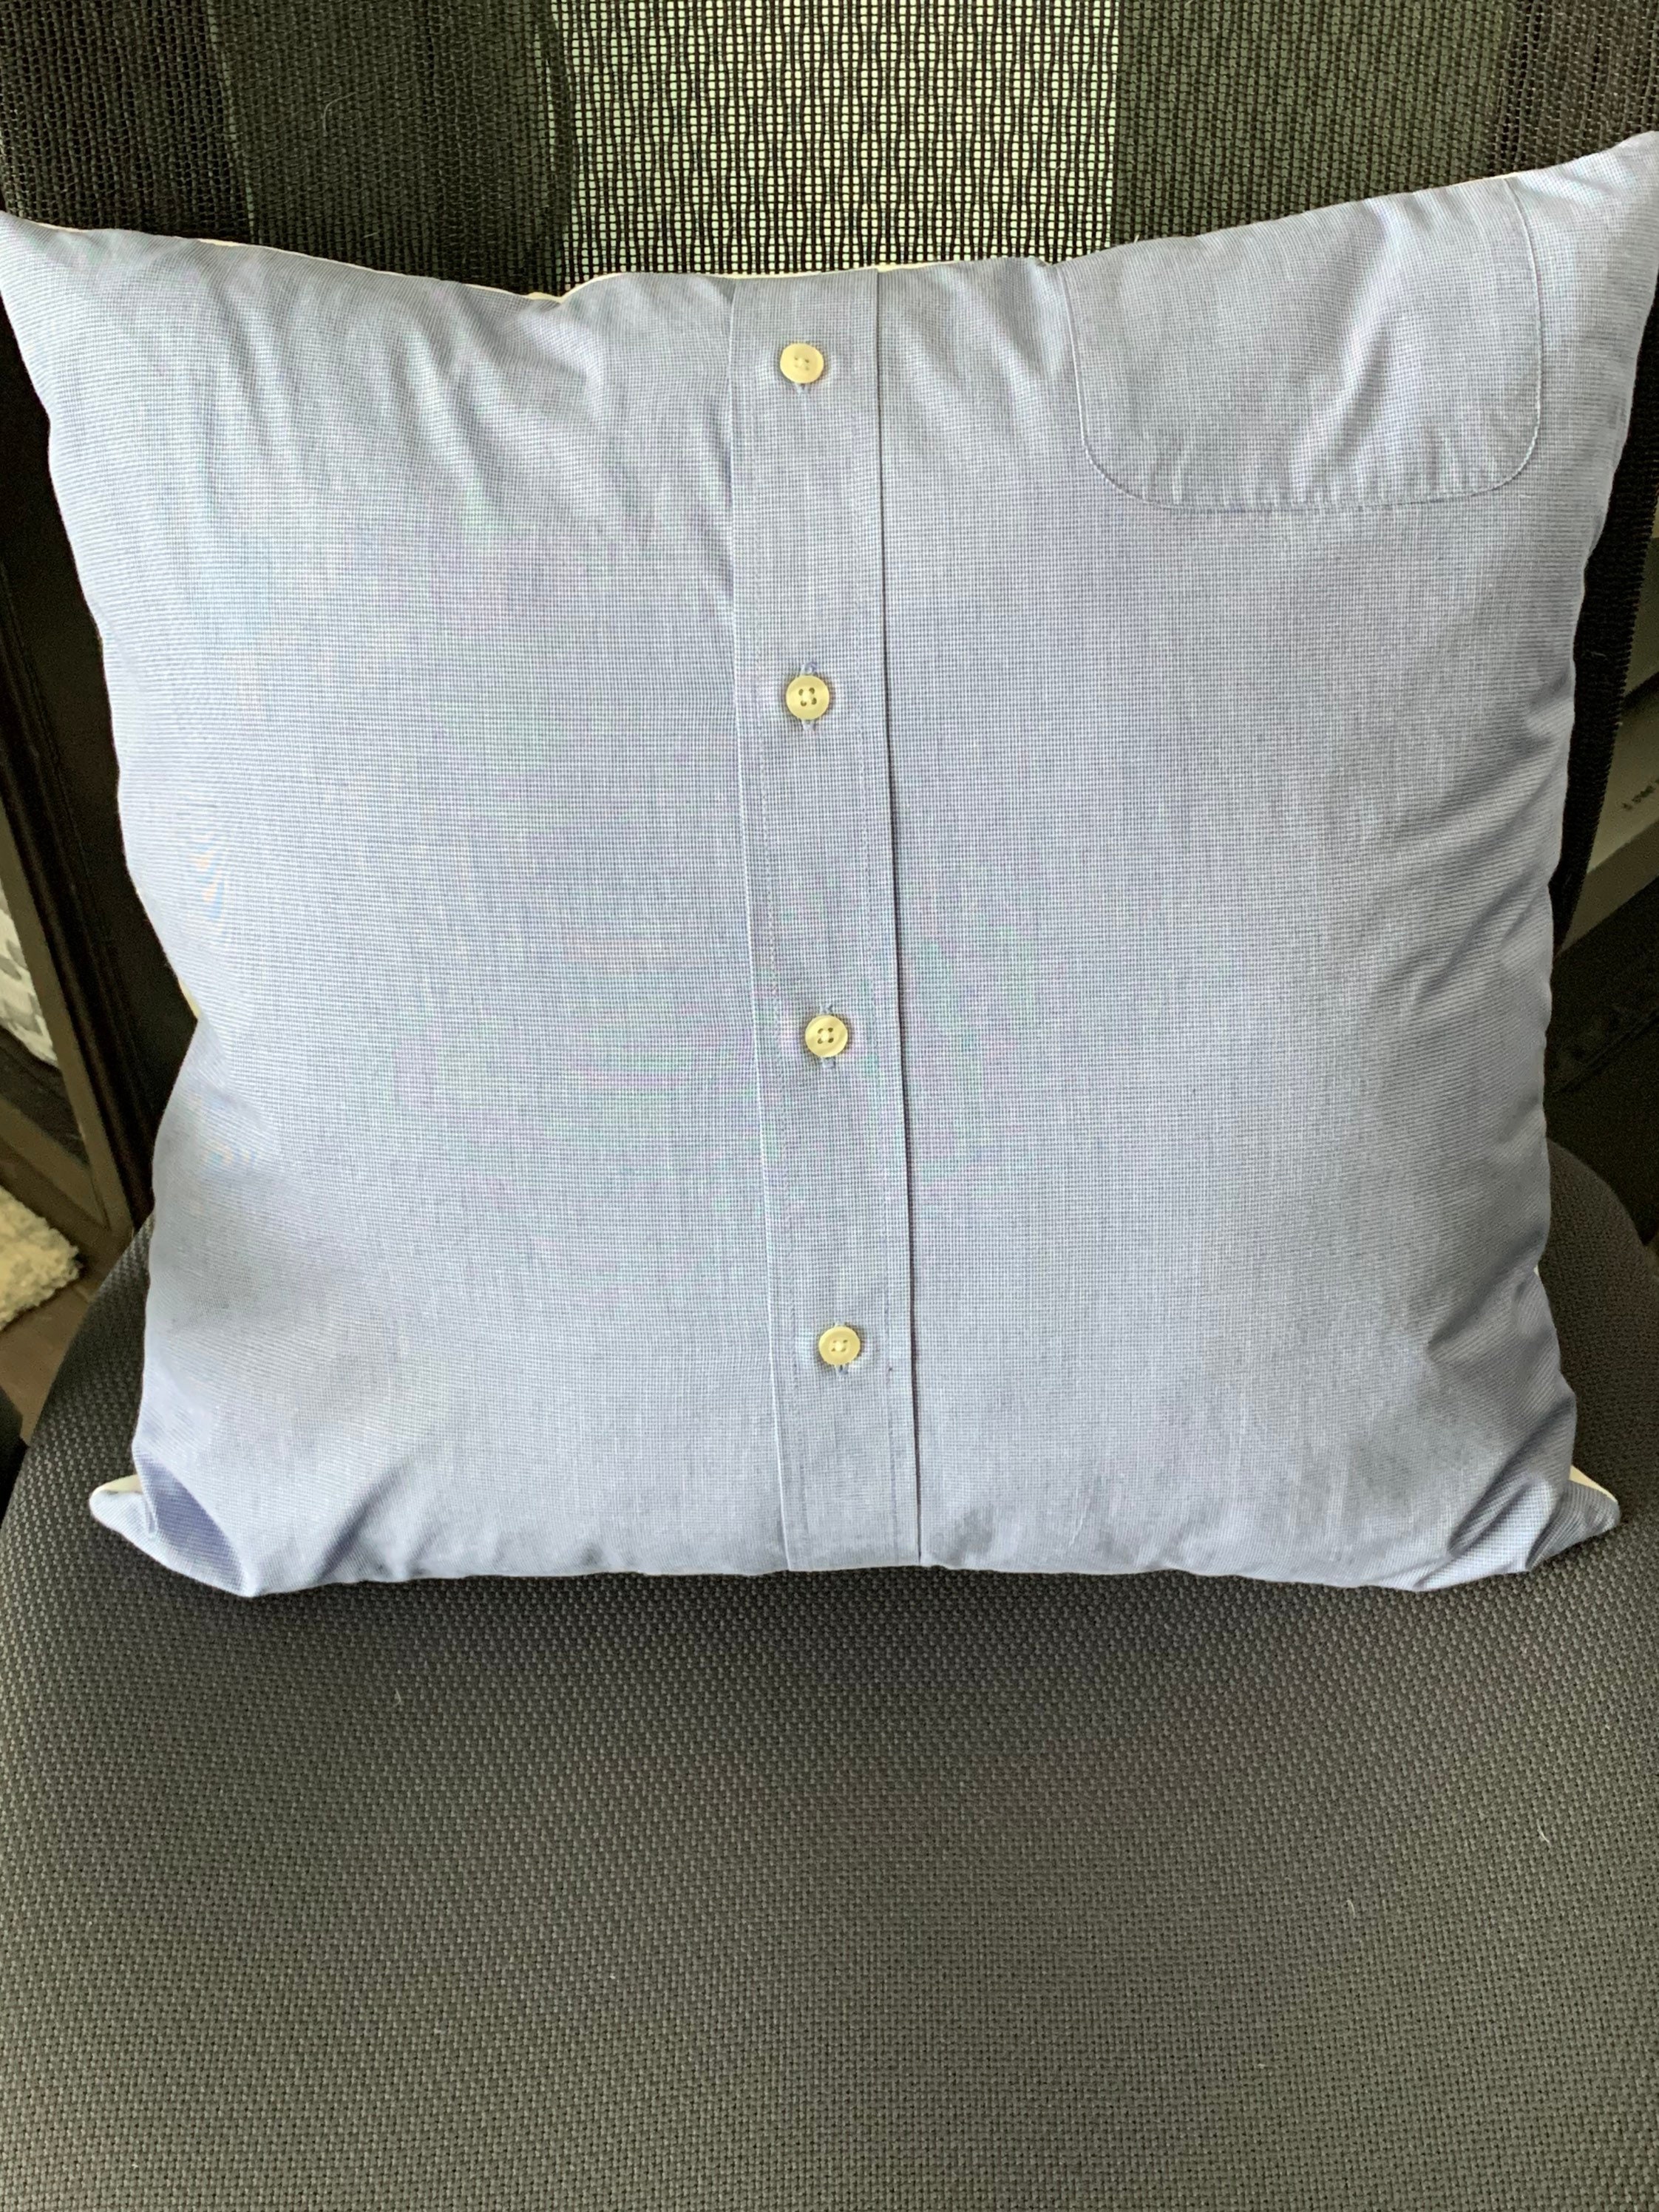 Necktie Pillow » Memory Lane Boutique